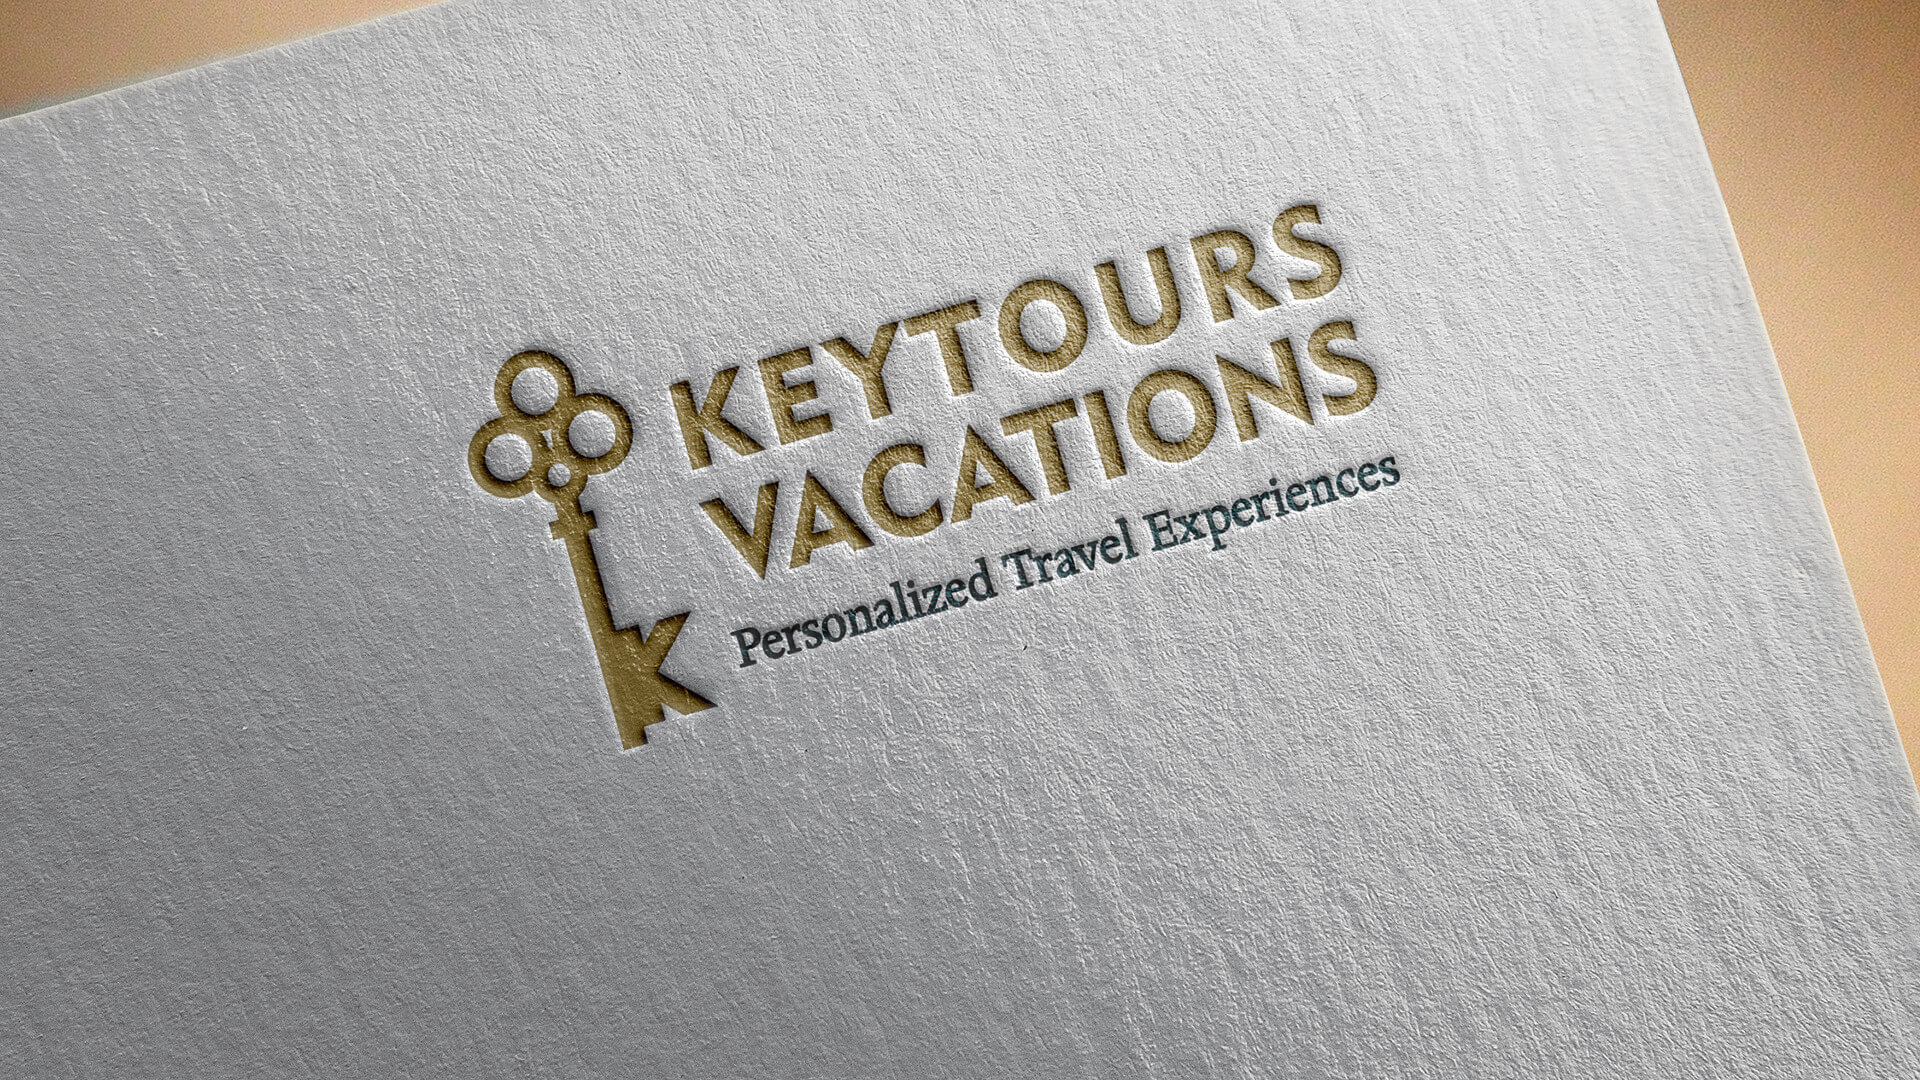 key tours travel agent